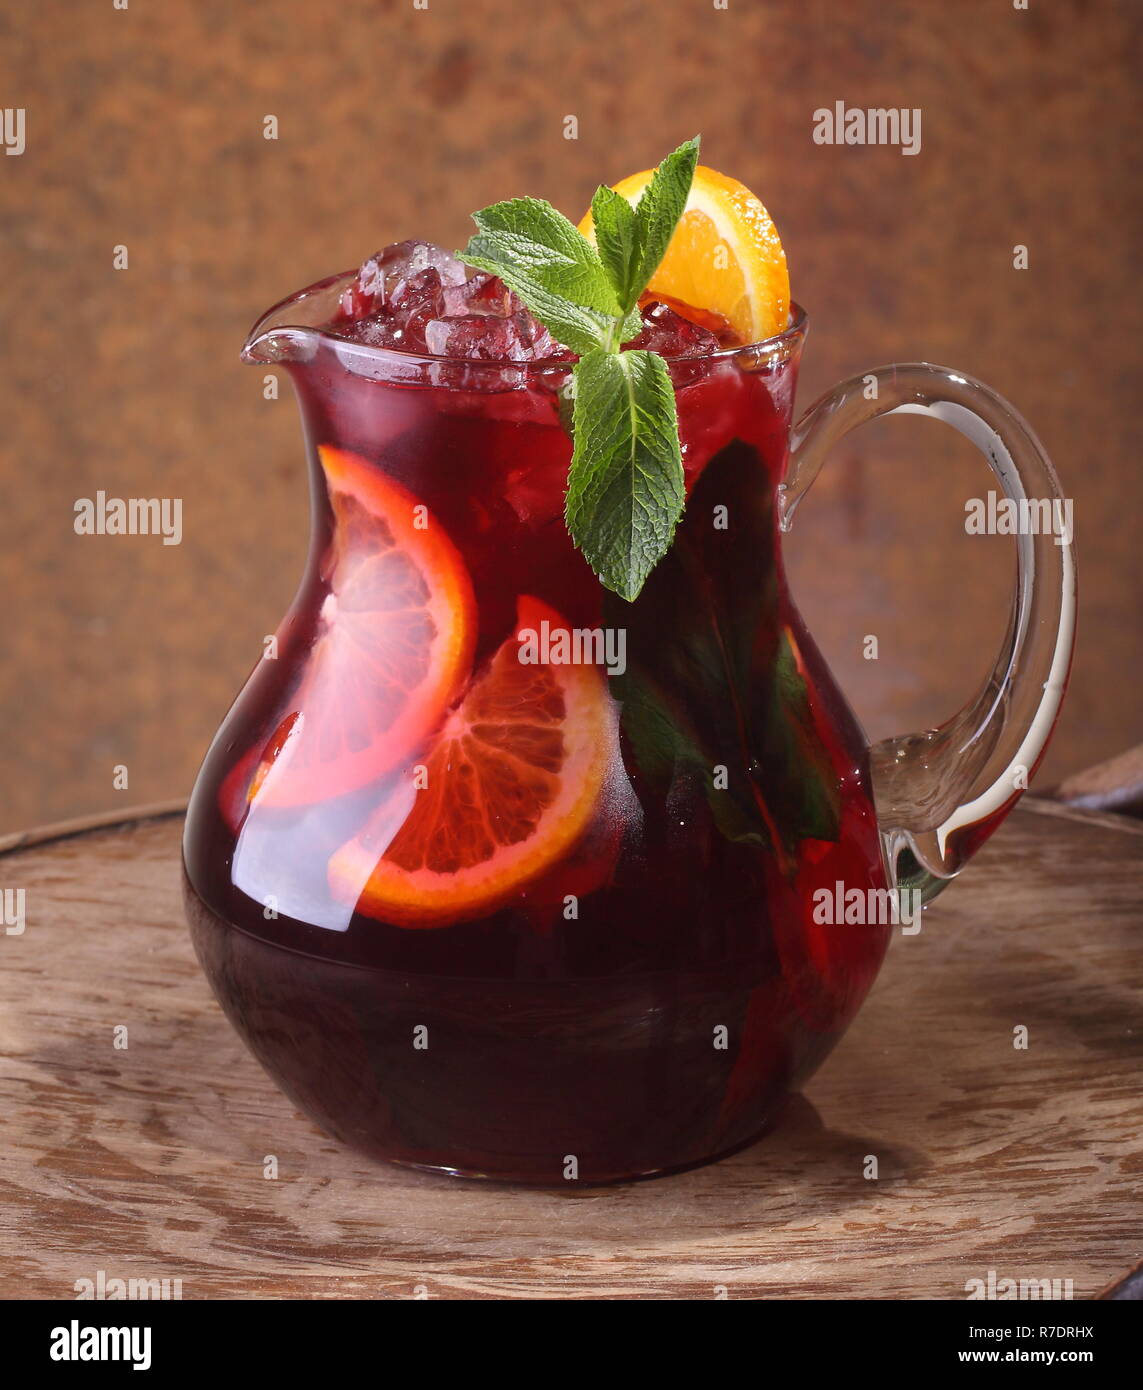 https://c8.alamy.com/comp/R7DRHX/sangria-wine-jug-on-wooden-table-with-orange-and-strawberry-R7DRHX.jpg